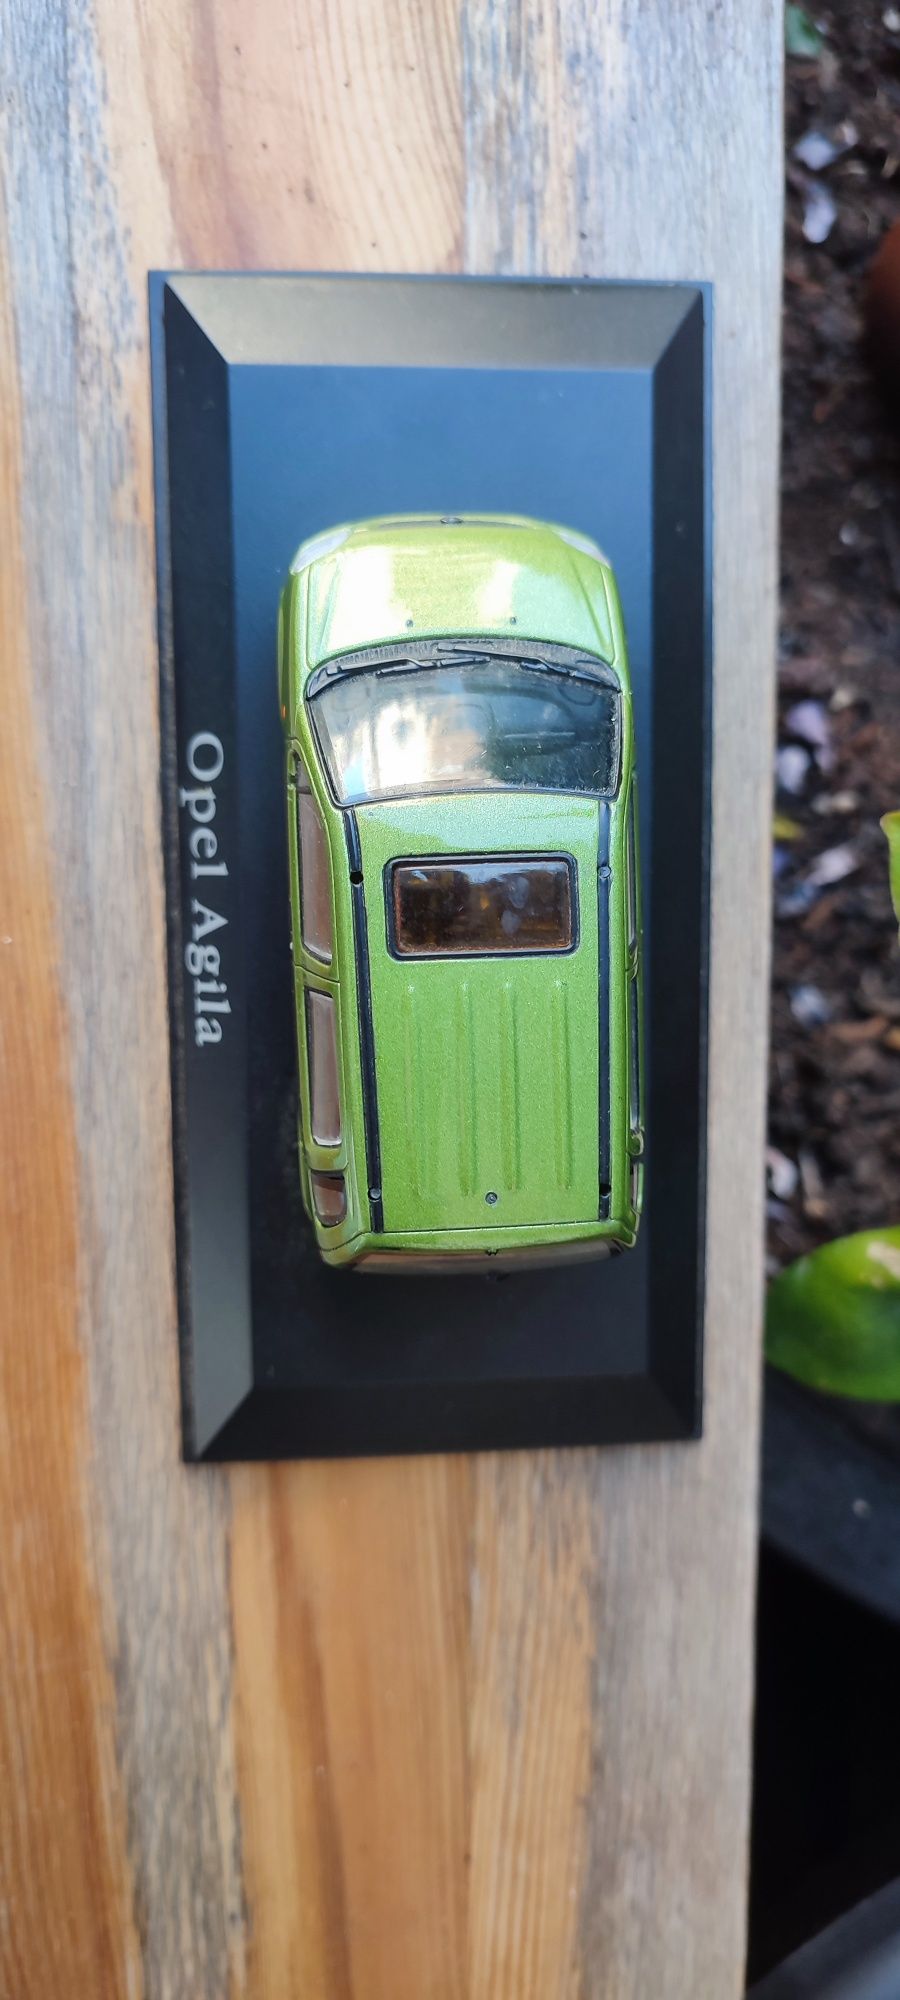 Miniatura Opel Agila